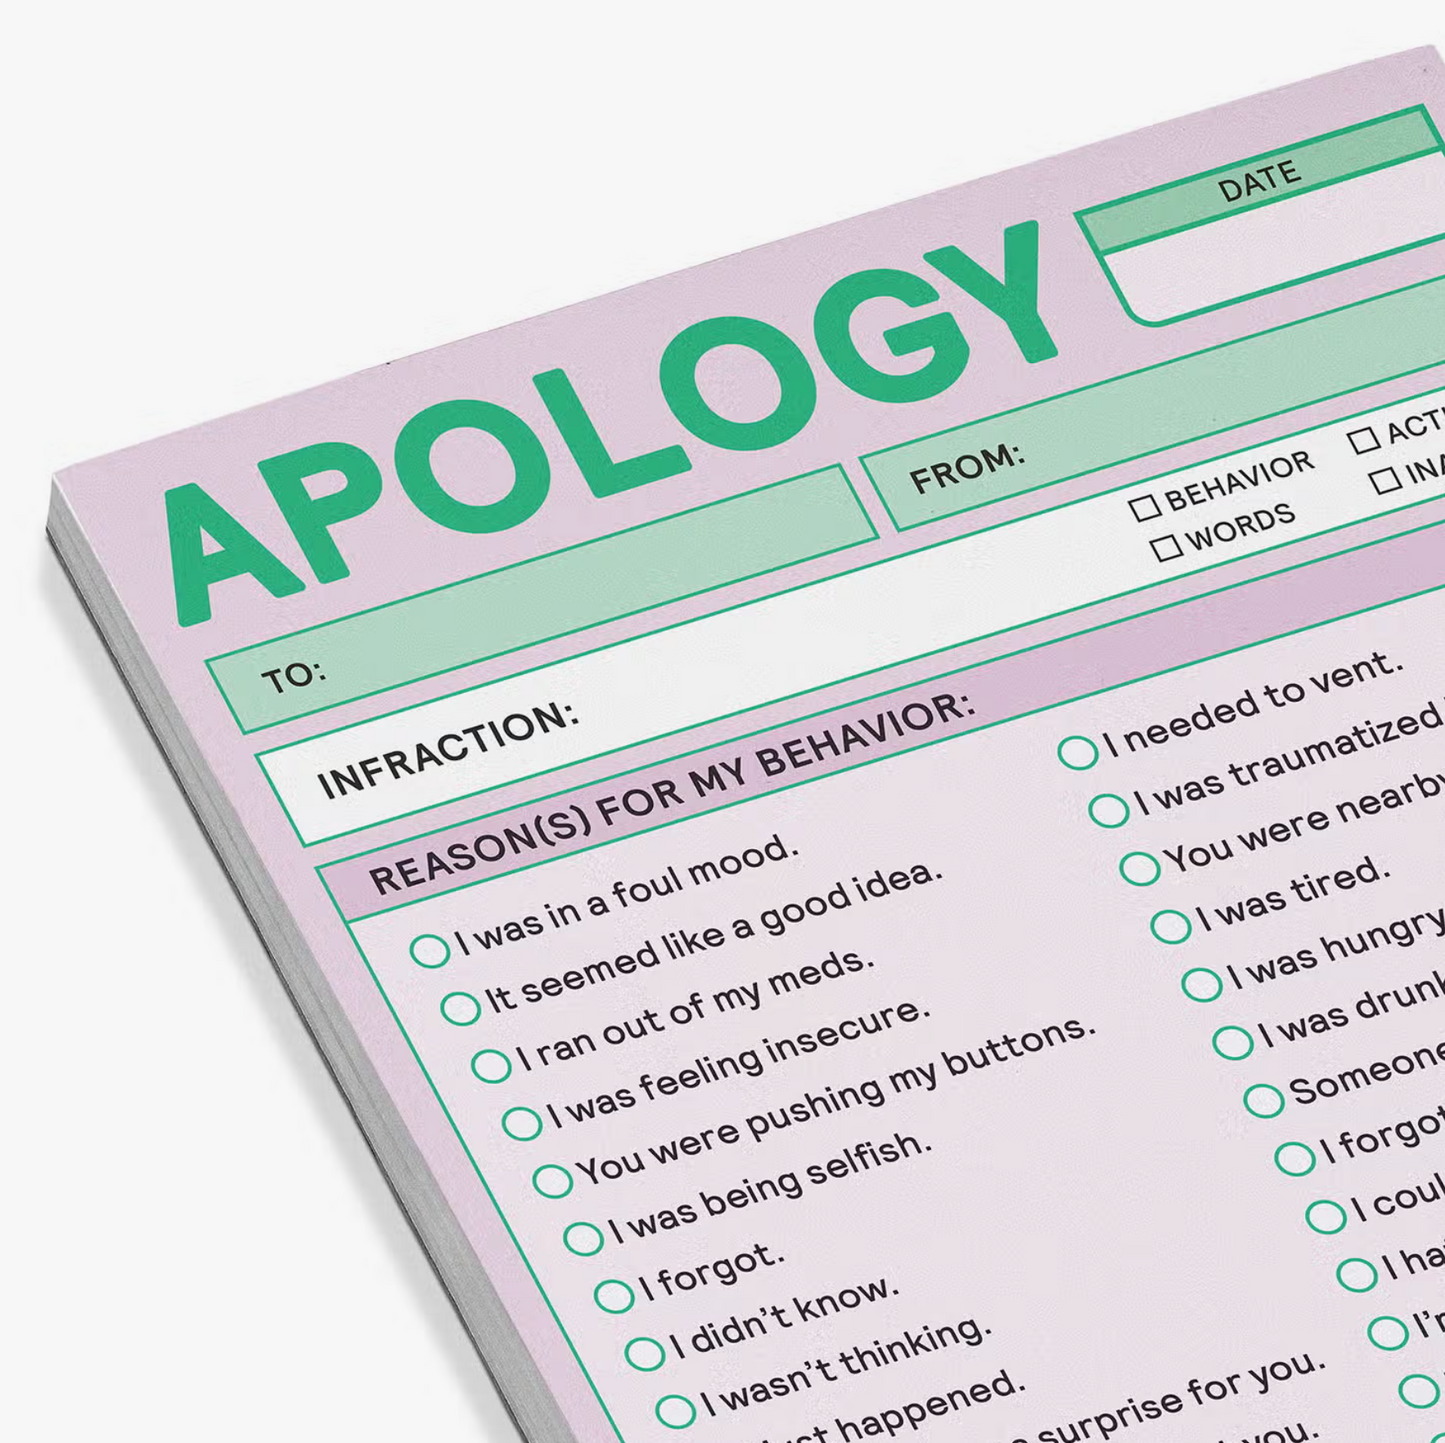 Apology Notepad (Pastel Edition) - 50 sheets